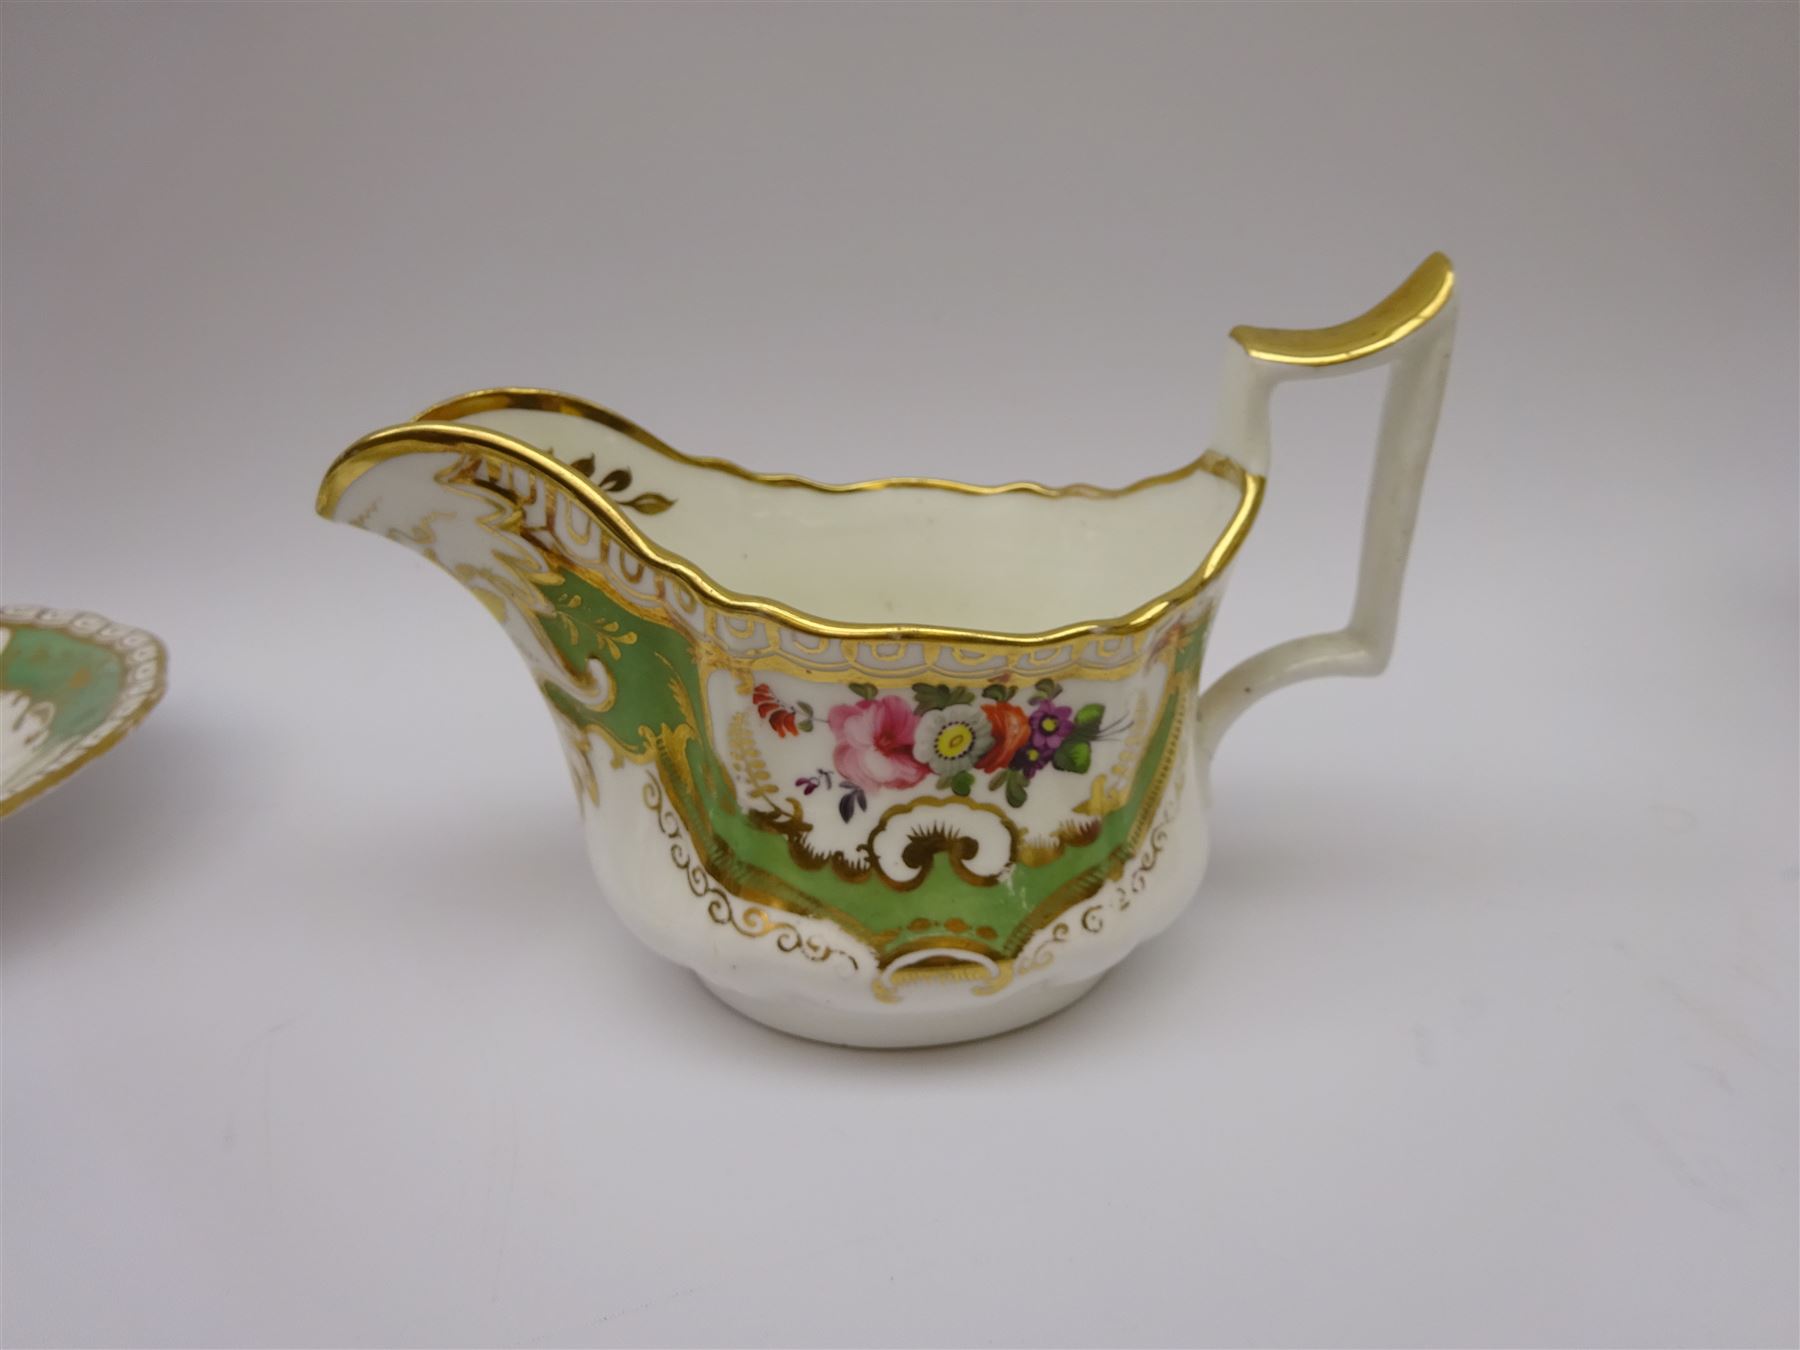 19th century English porcelain tea service - Image 8 of 10